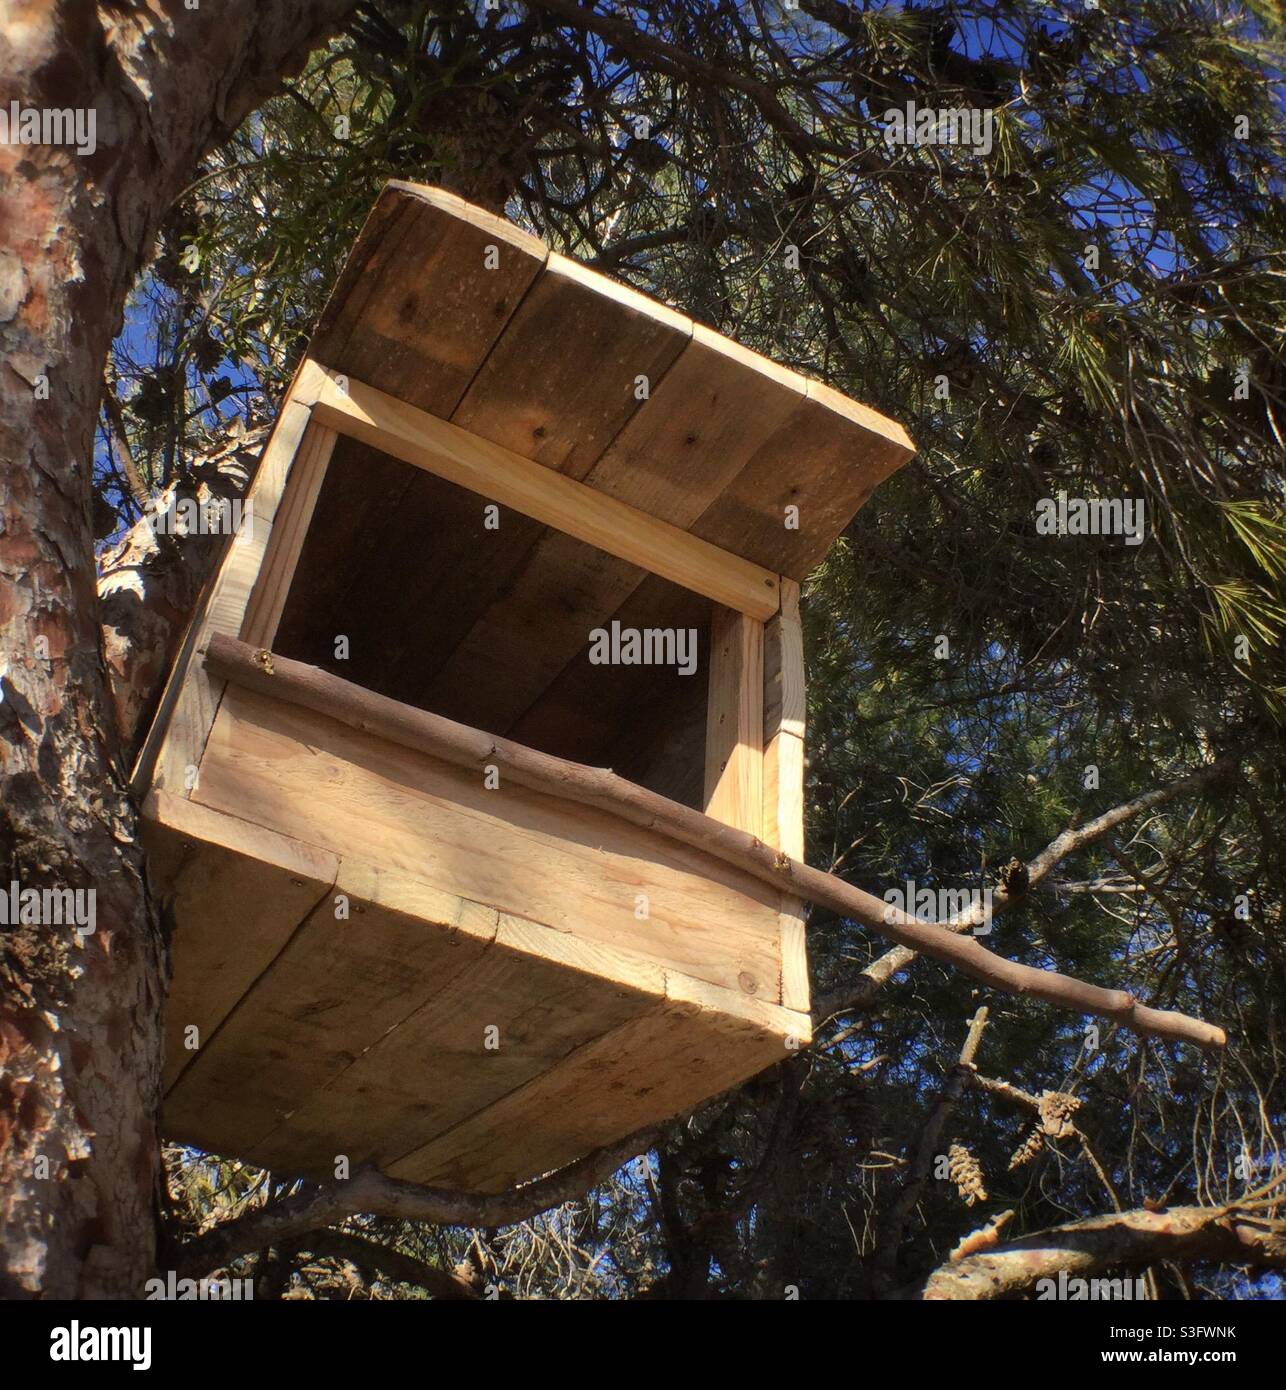 Kestrel nest box made from a pallet, Catalonia, Spain. Stock Photo